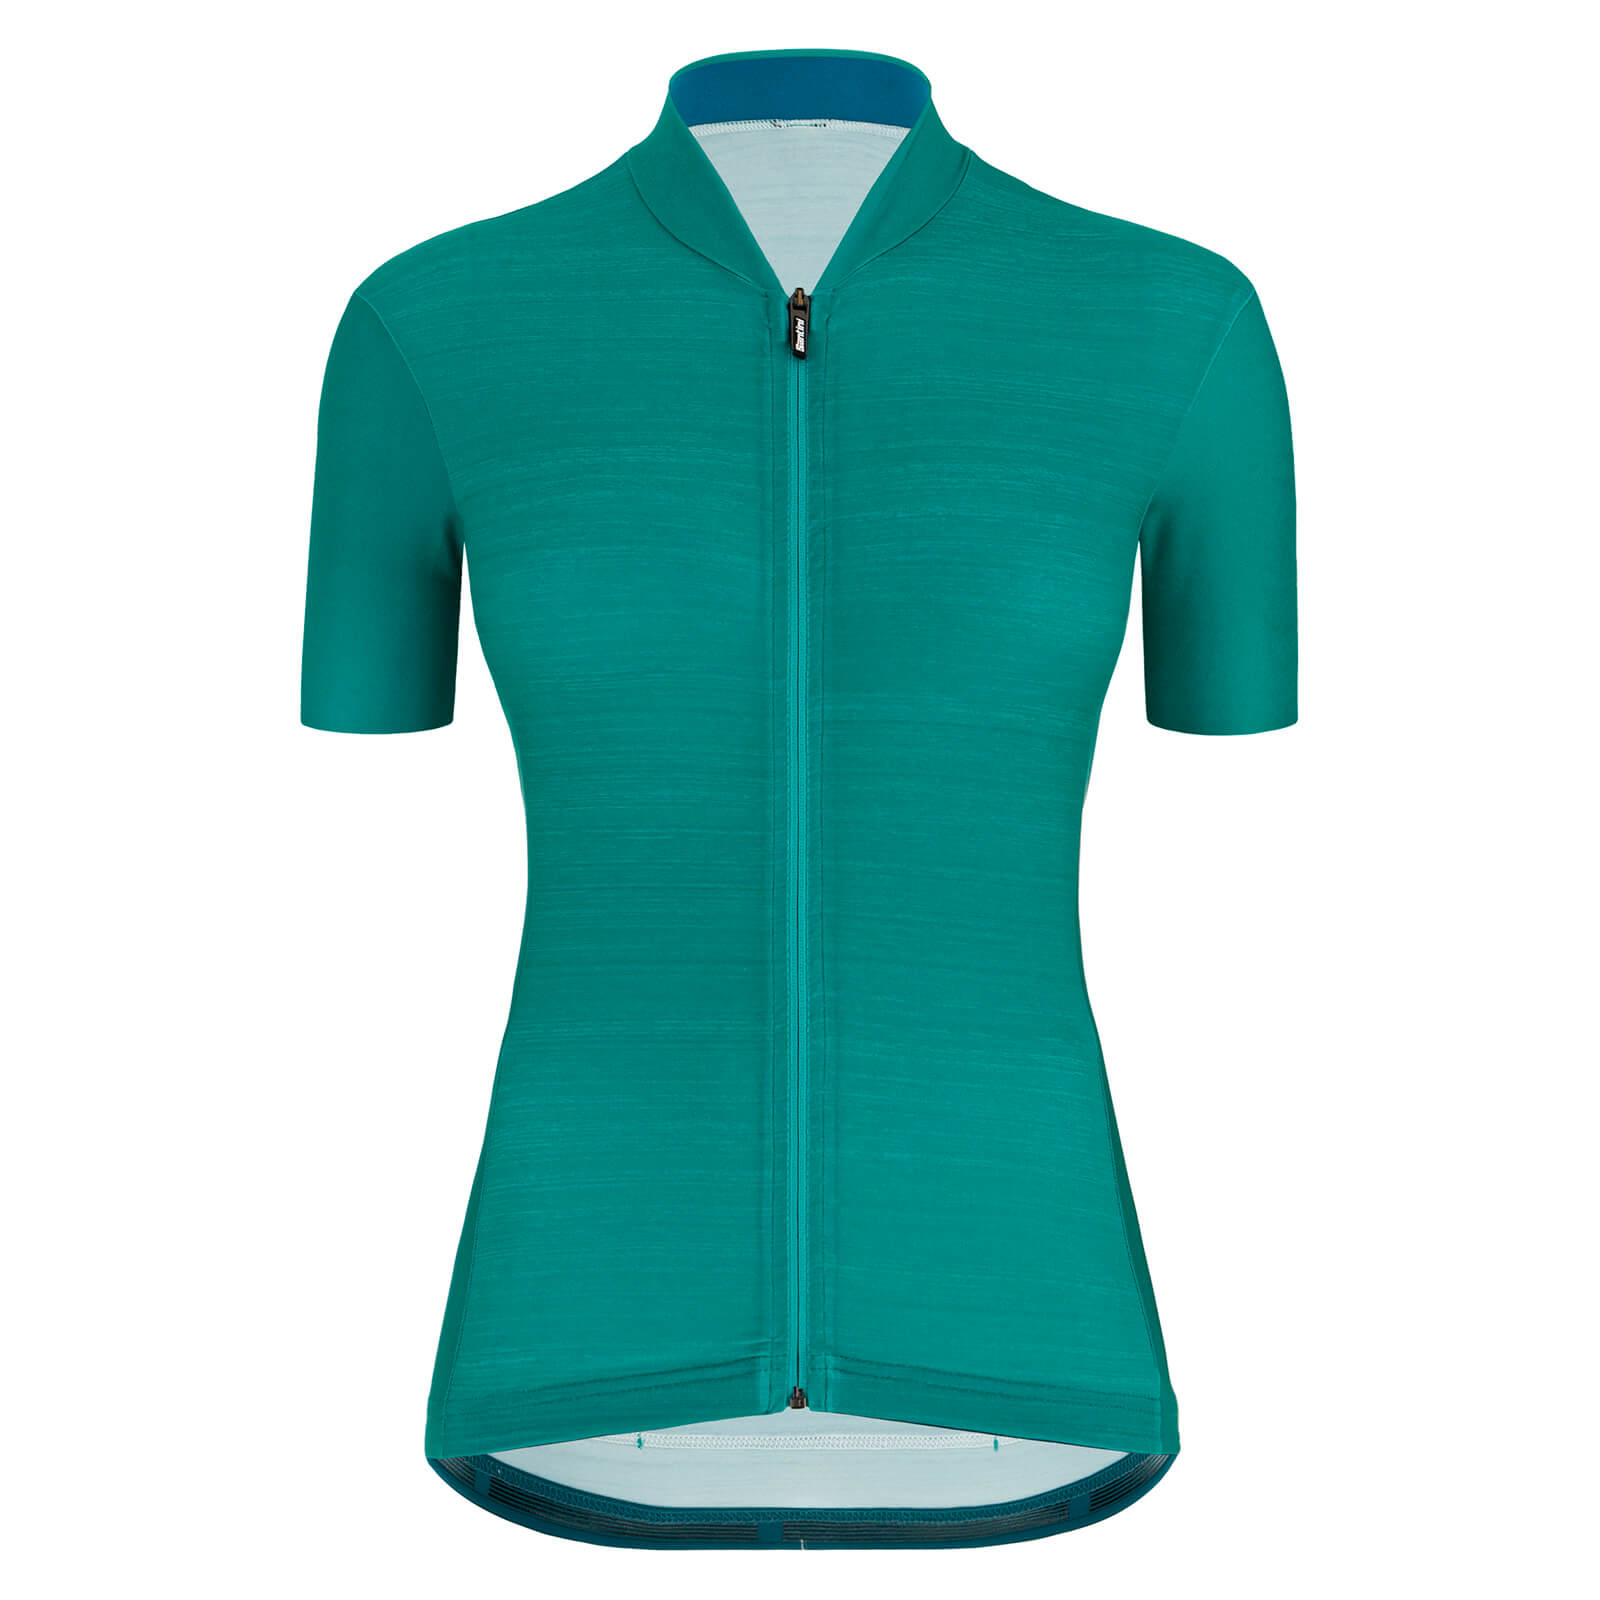 Santini Women's Colore Jersey - XS - Petrol Green